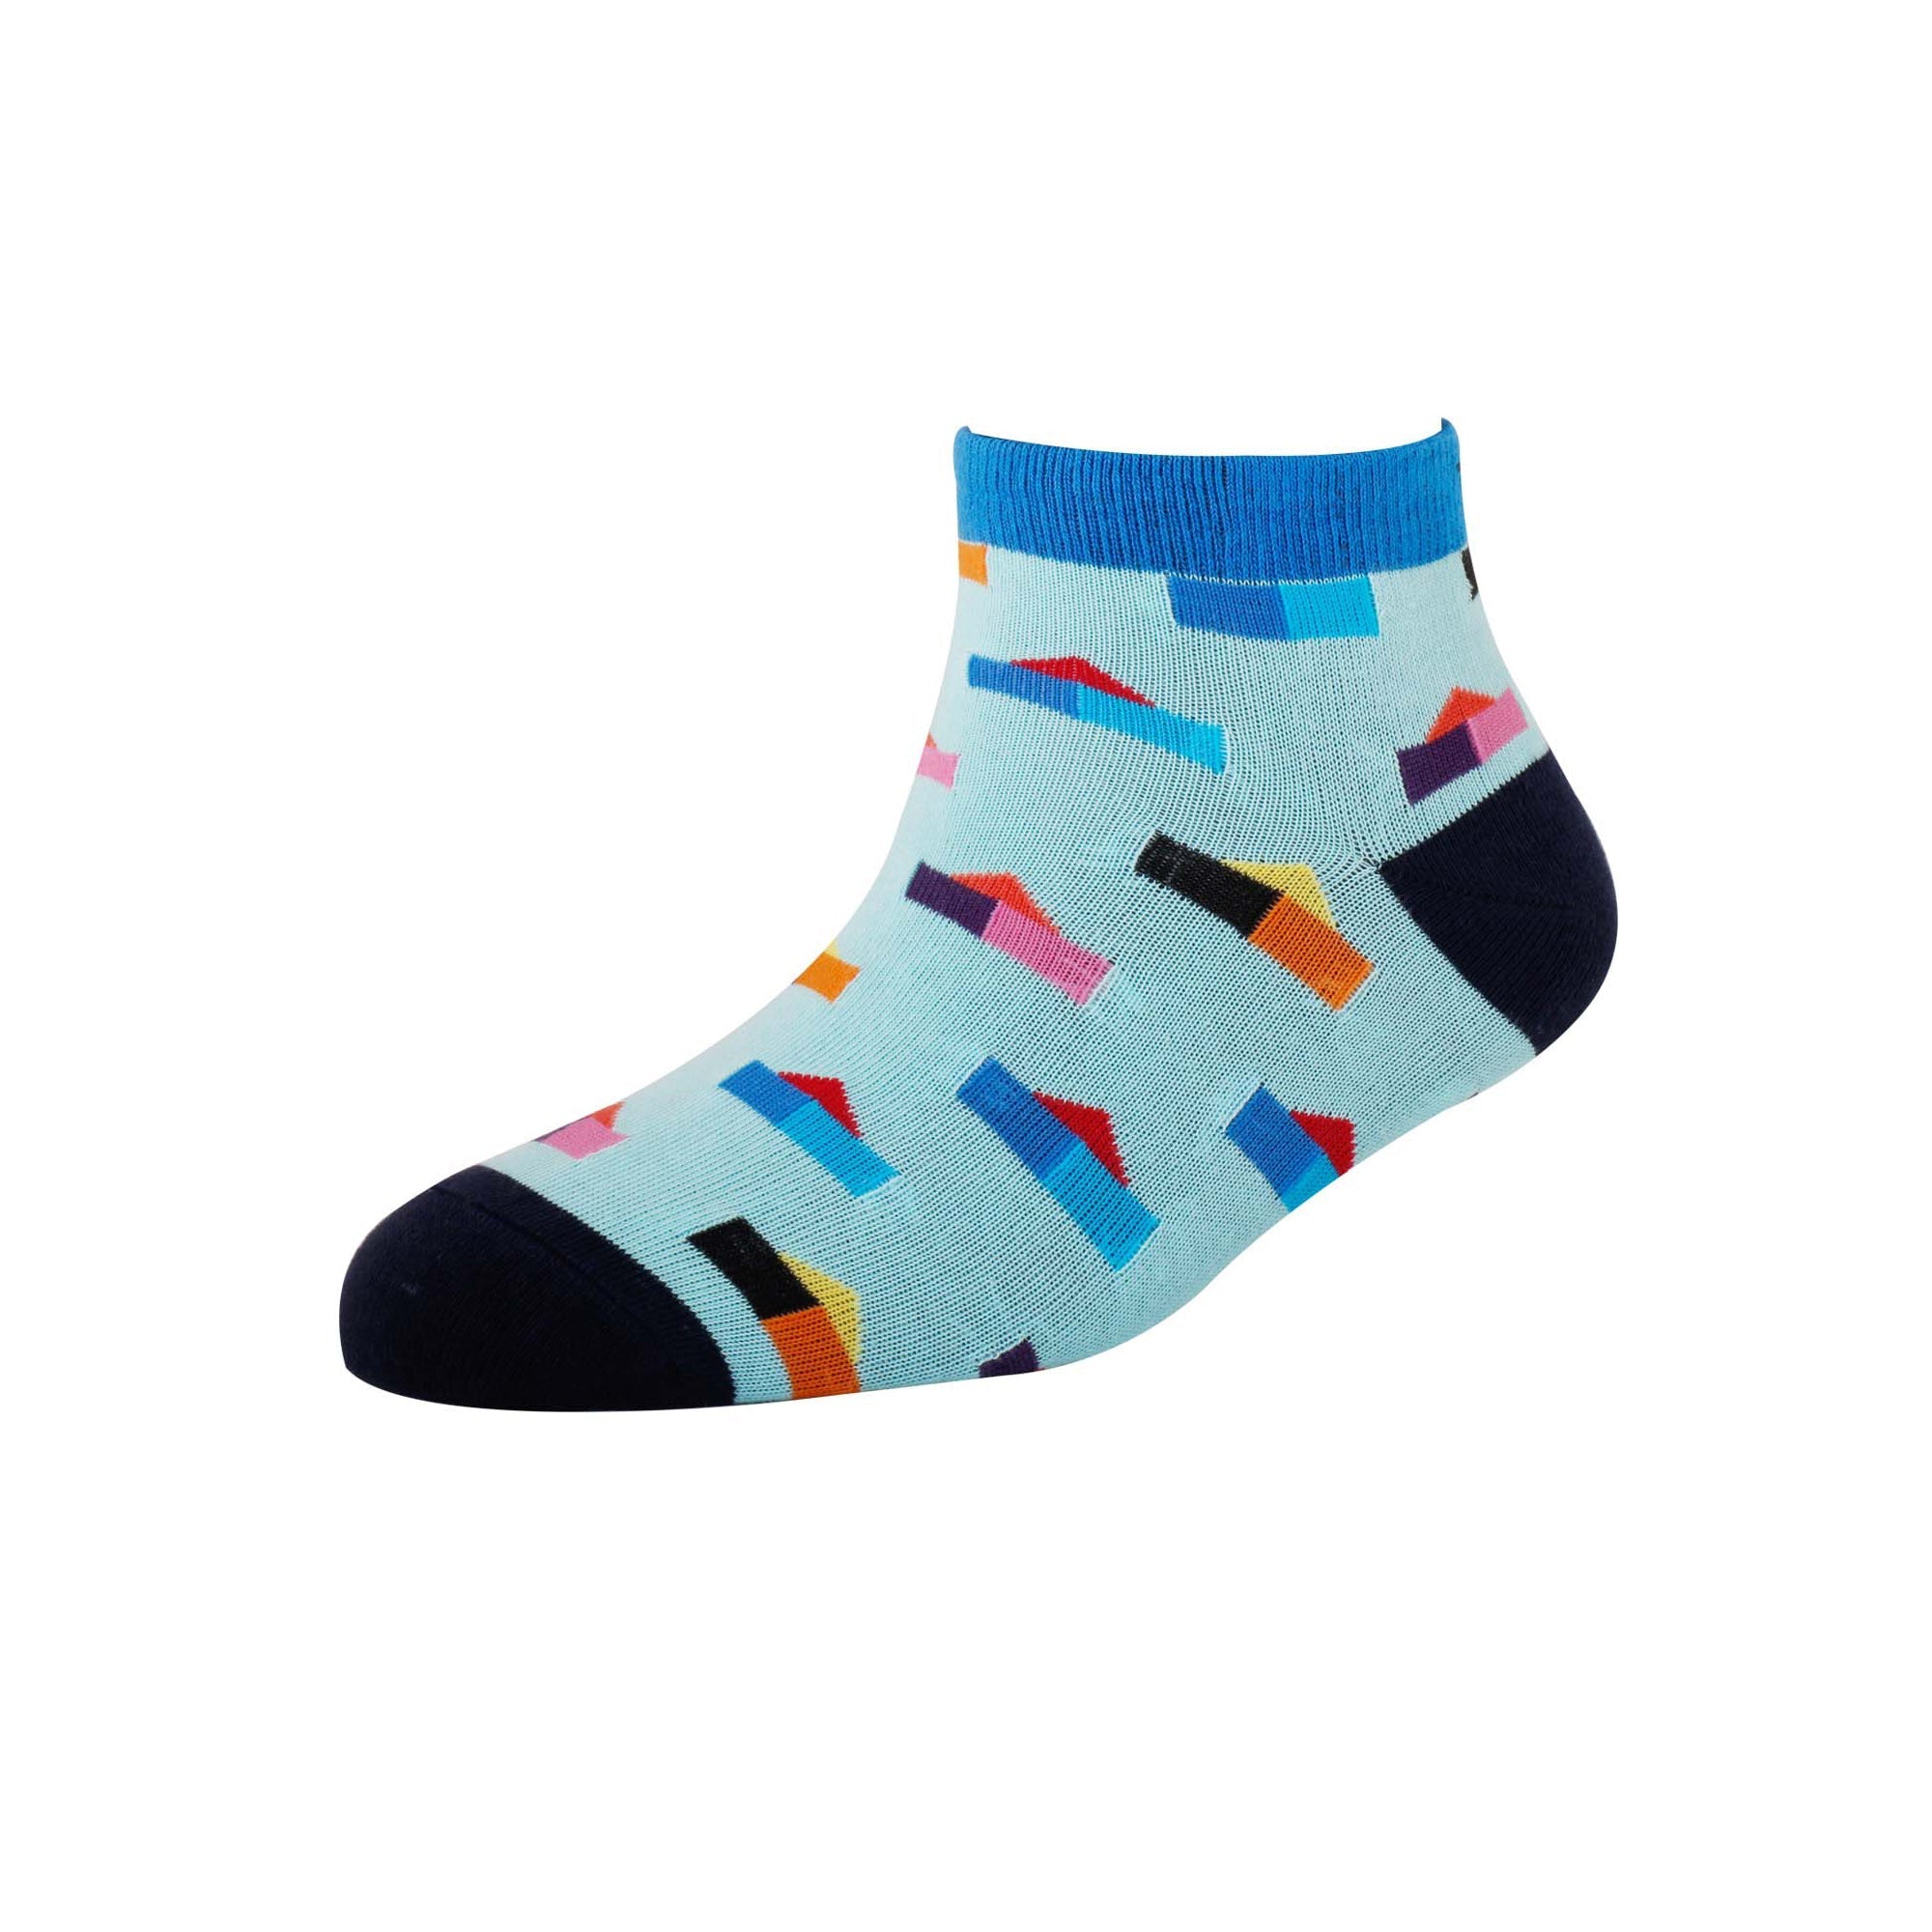 Men's YW-M1-232 Fashion House Ankle Socks